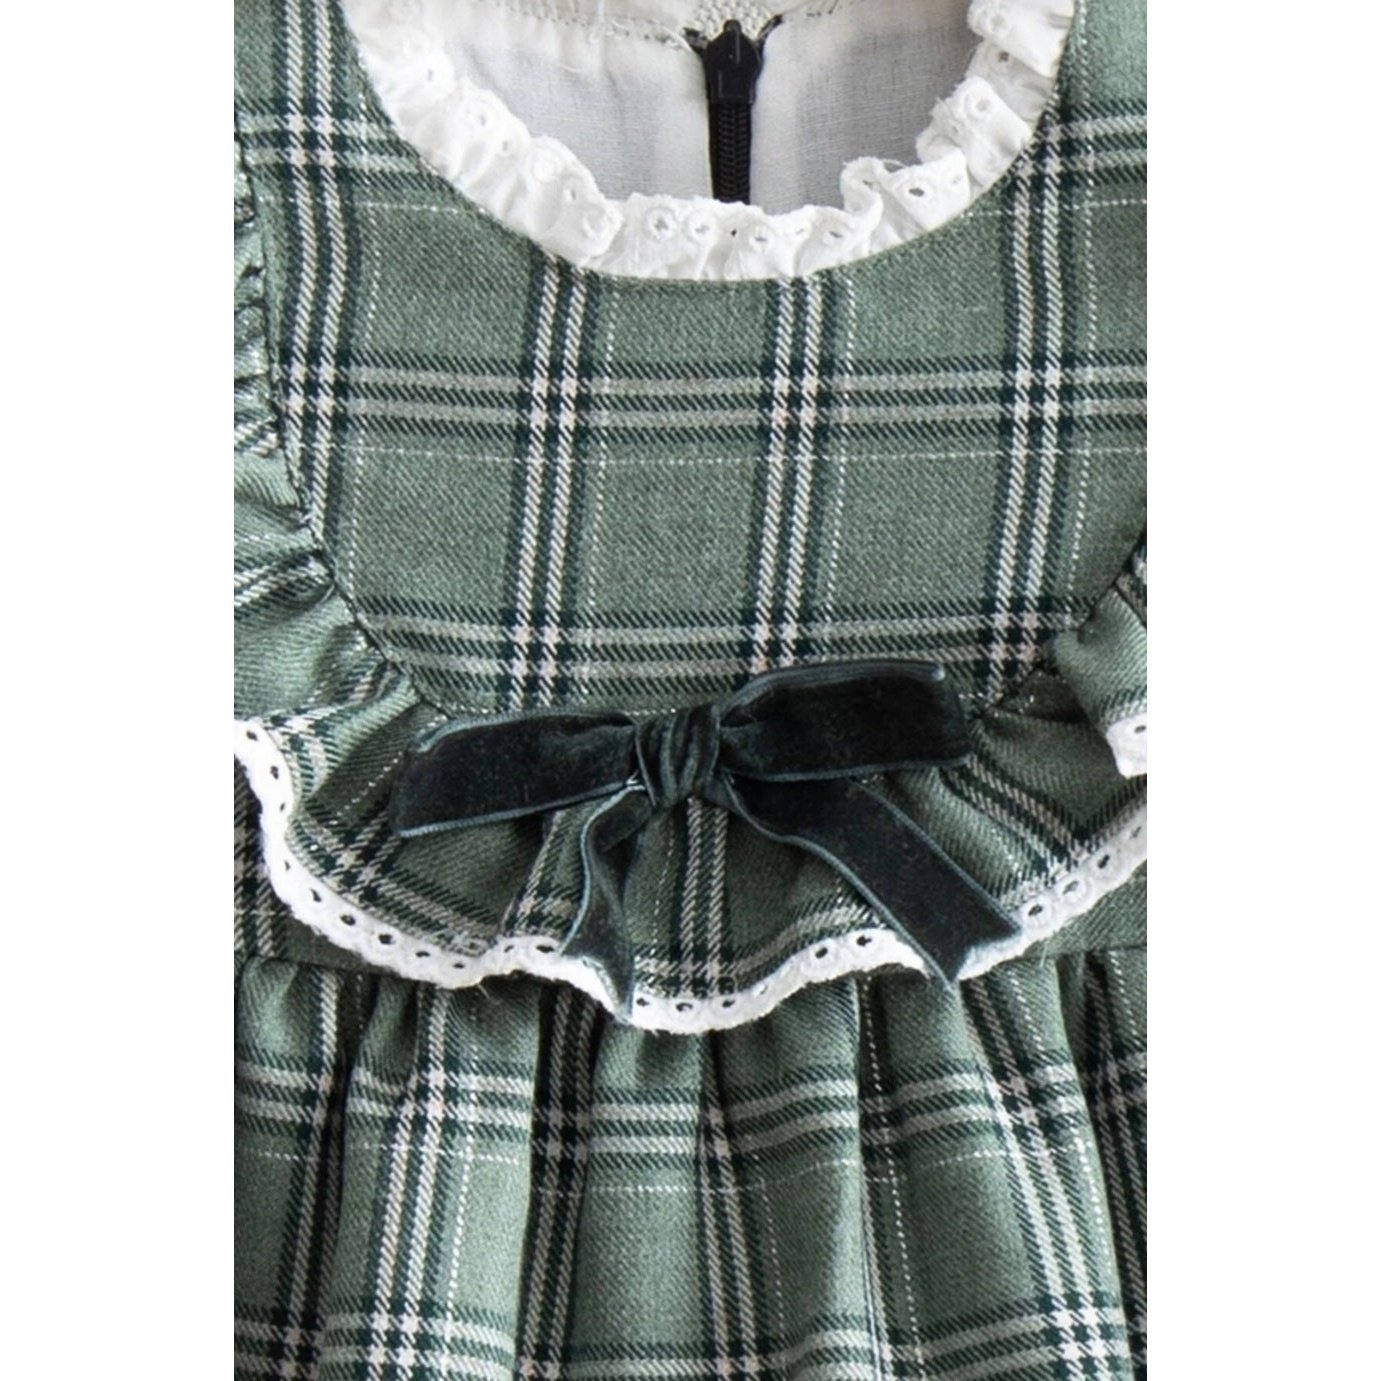 Long sleeve dress 2 pieces set (6-9 m)